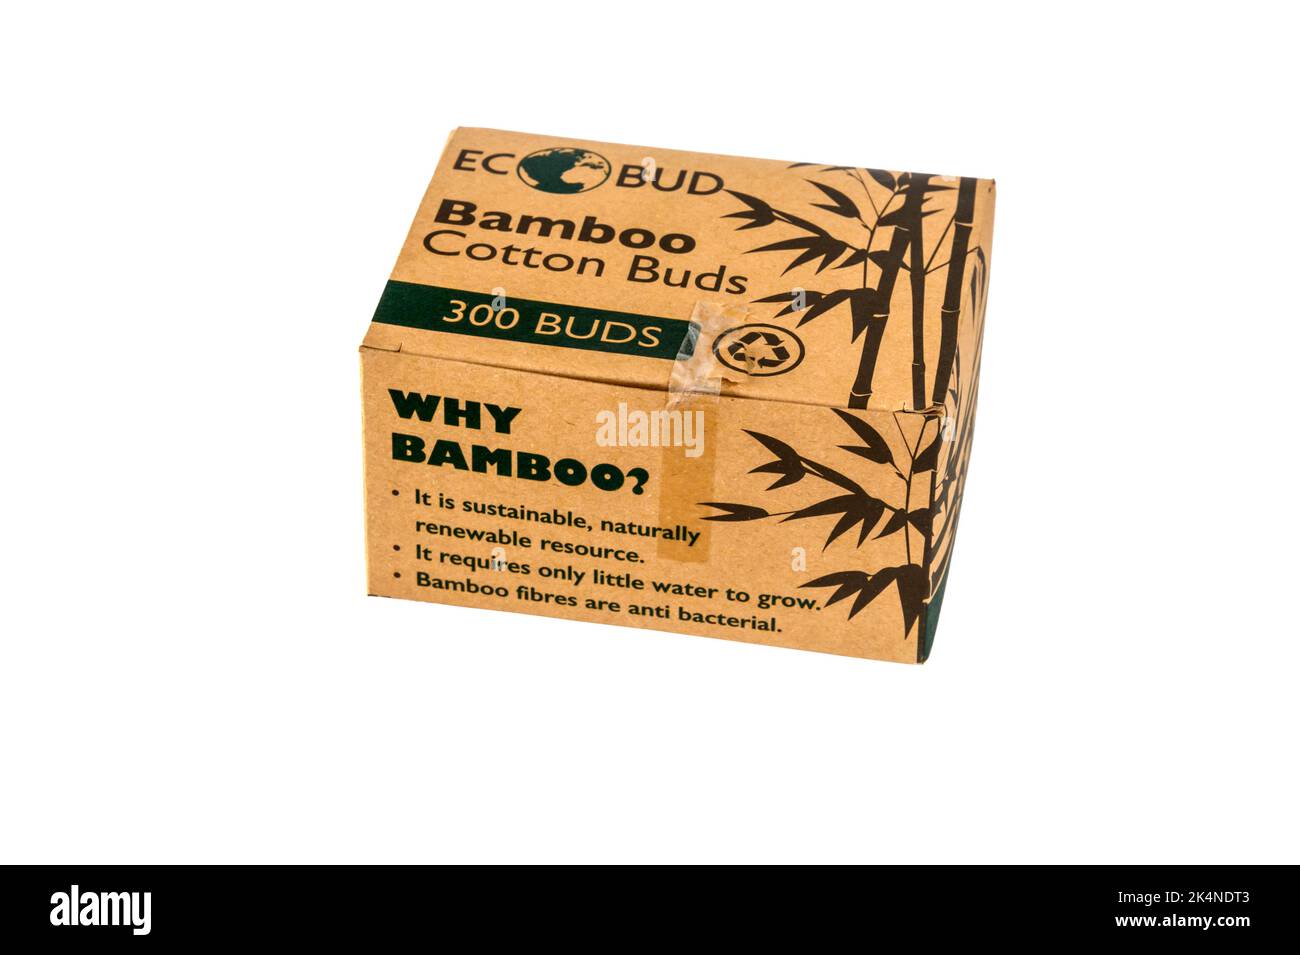 Box of Eco Bud bamboo cotton buds. Stock Photo